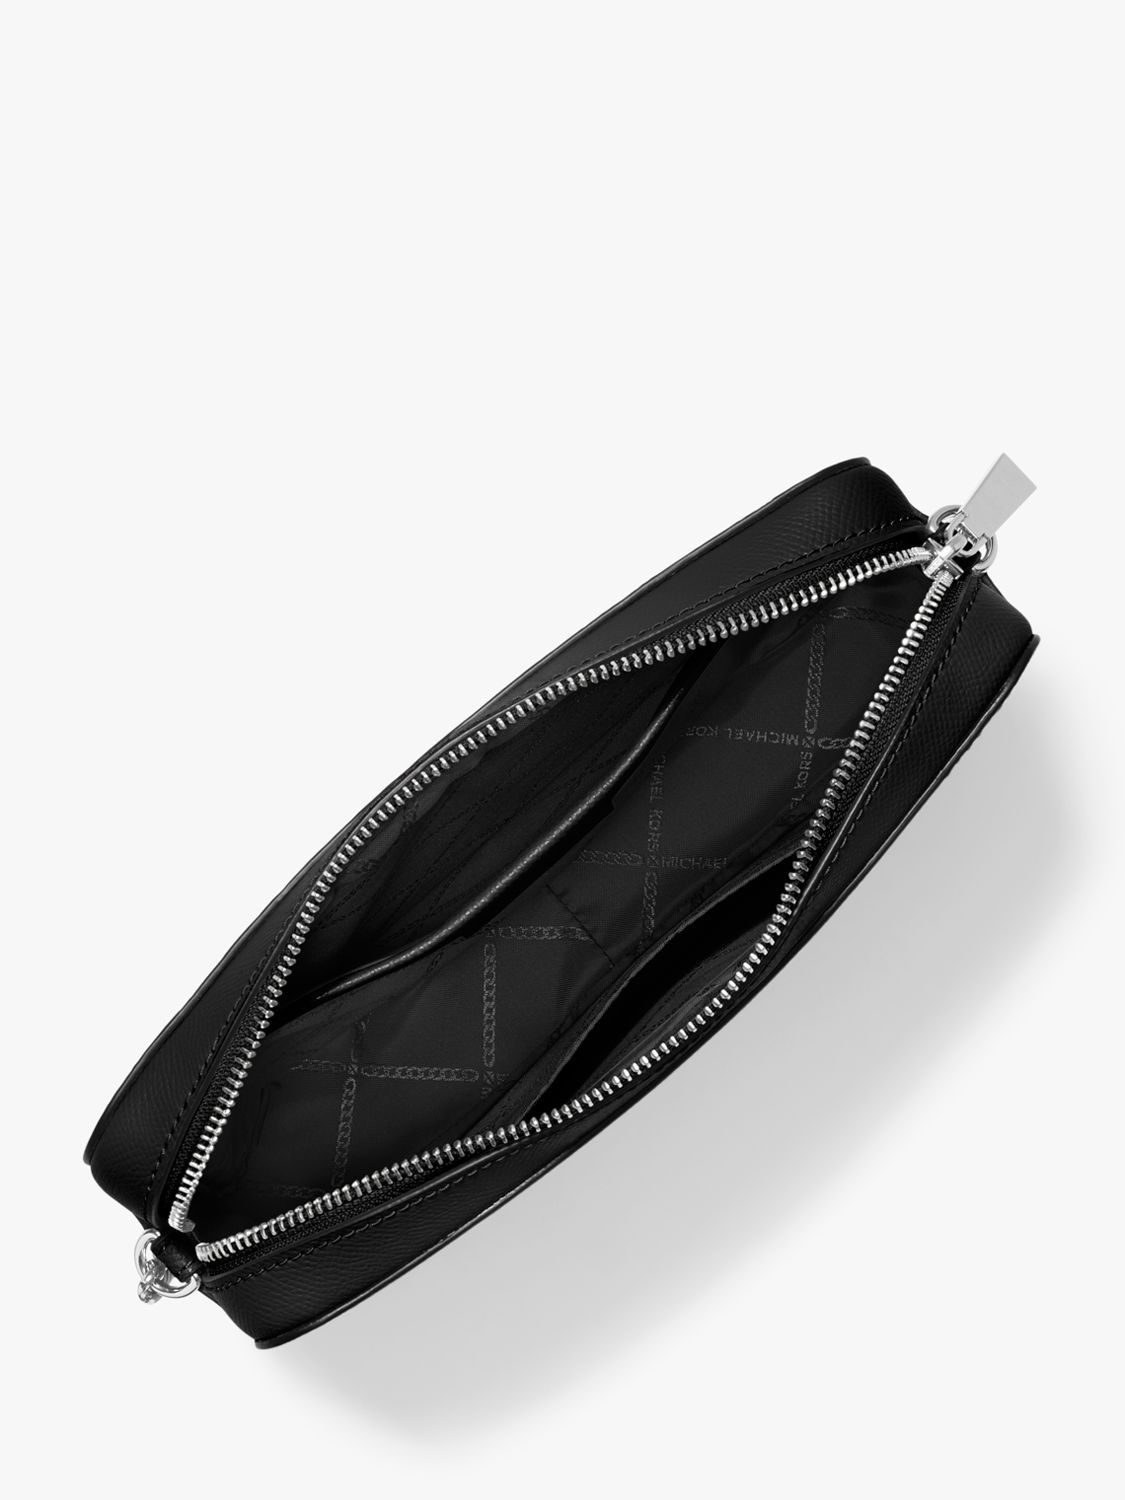 Michael Kors Jet Set Leather Crossbody Bag